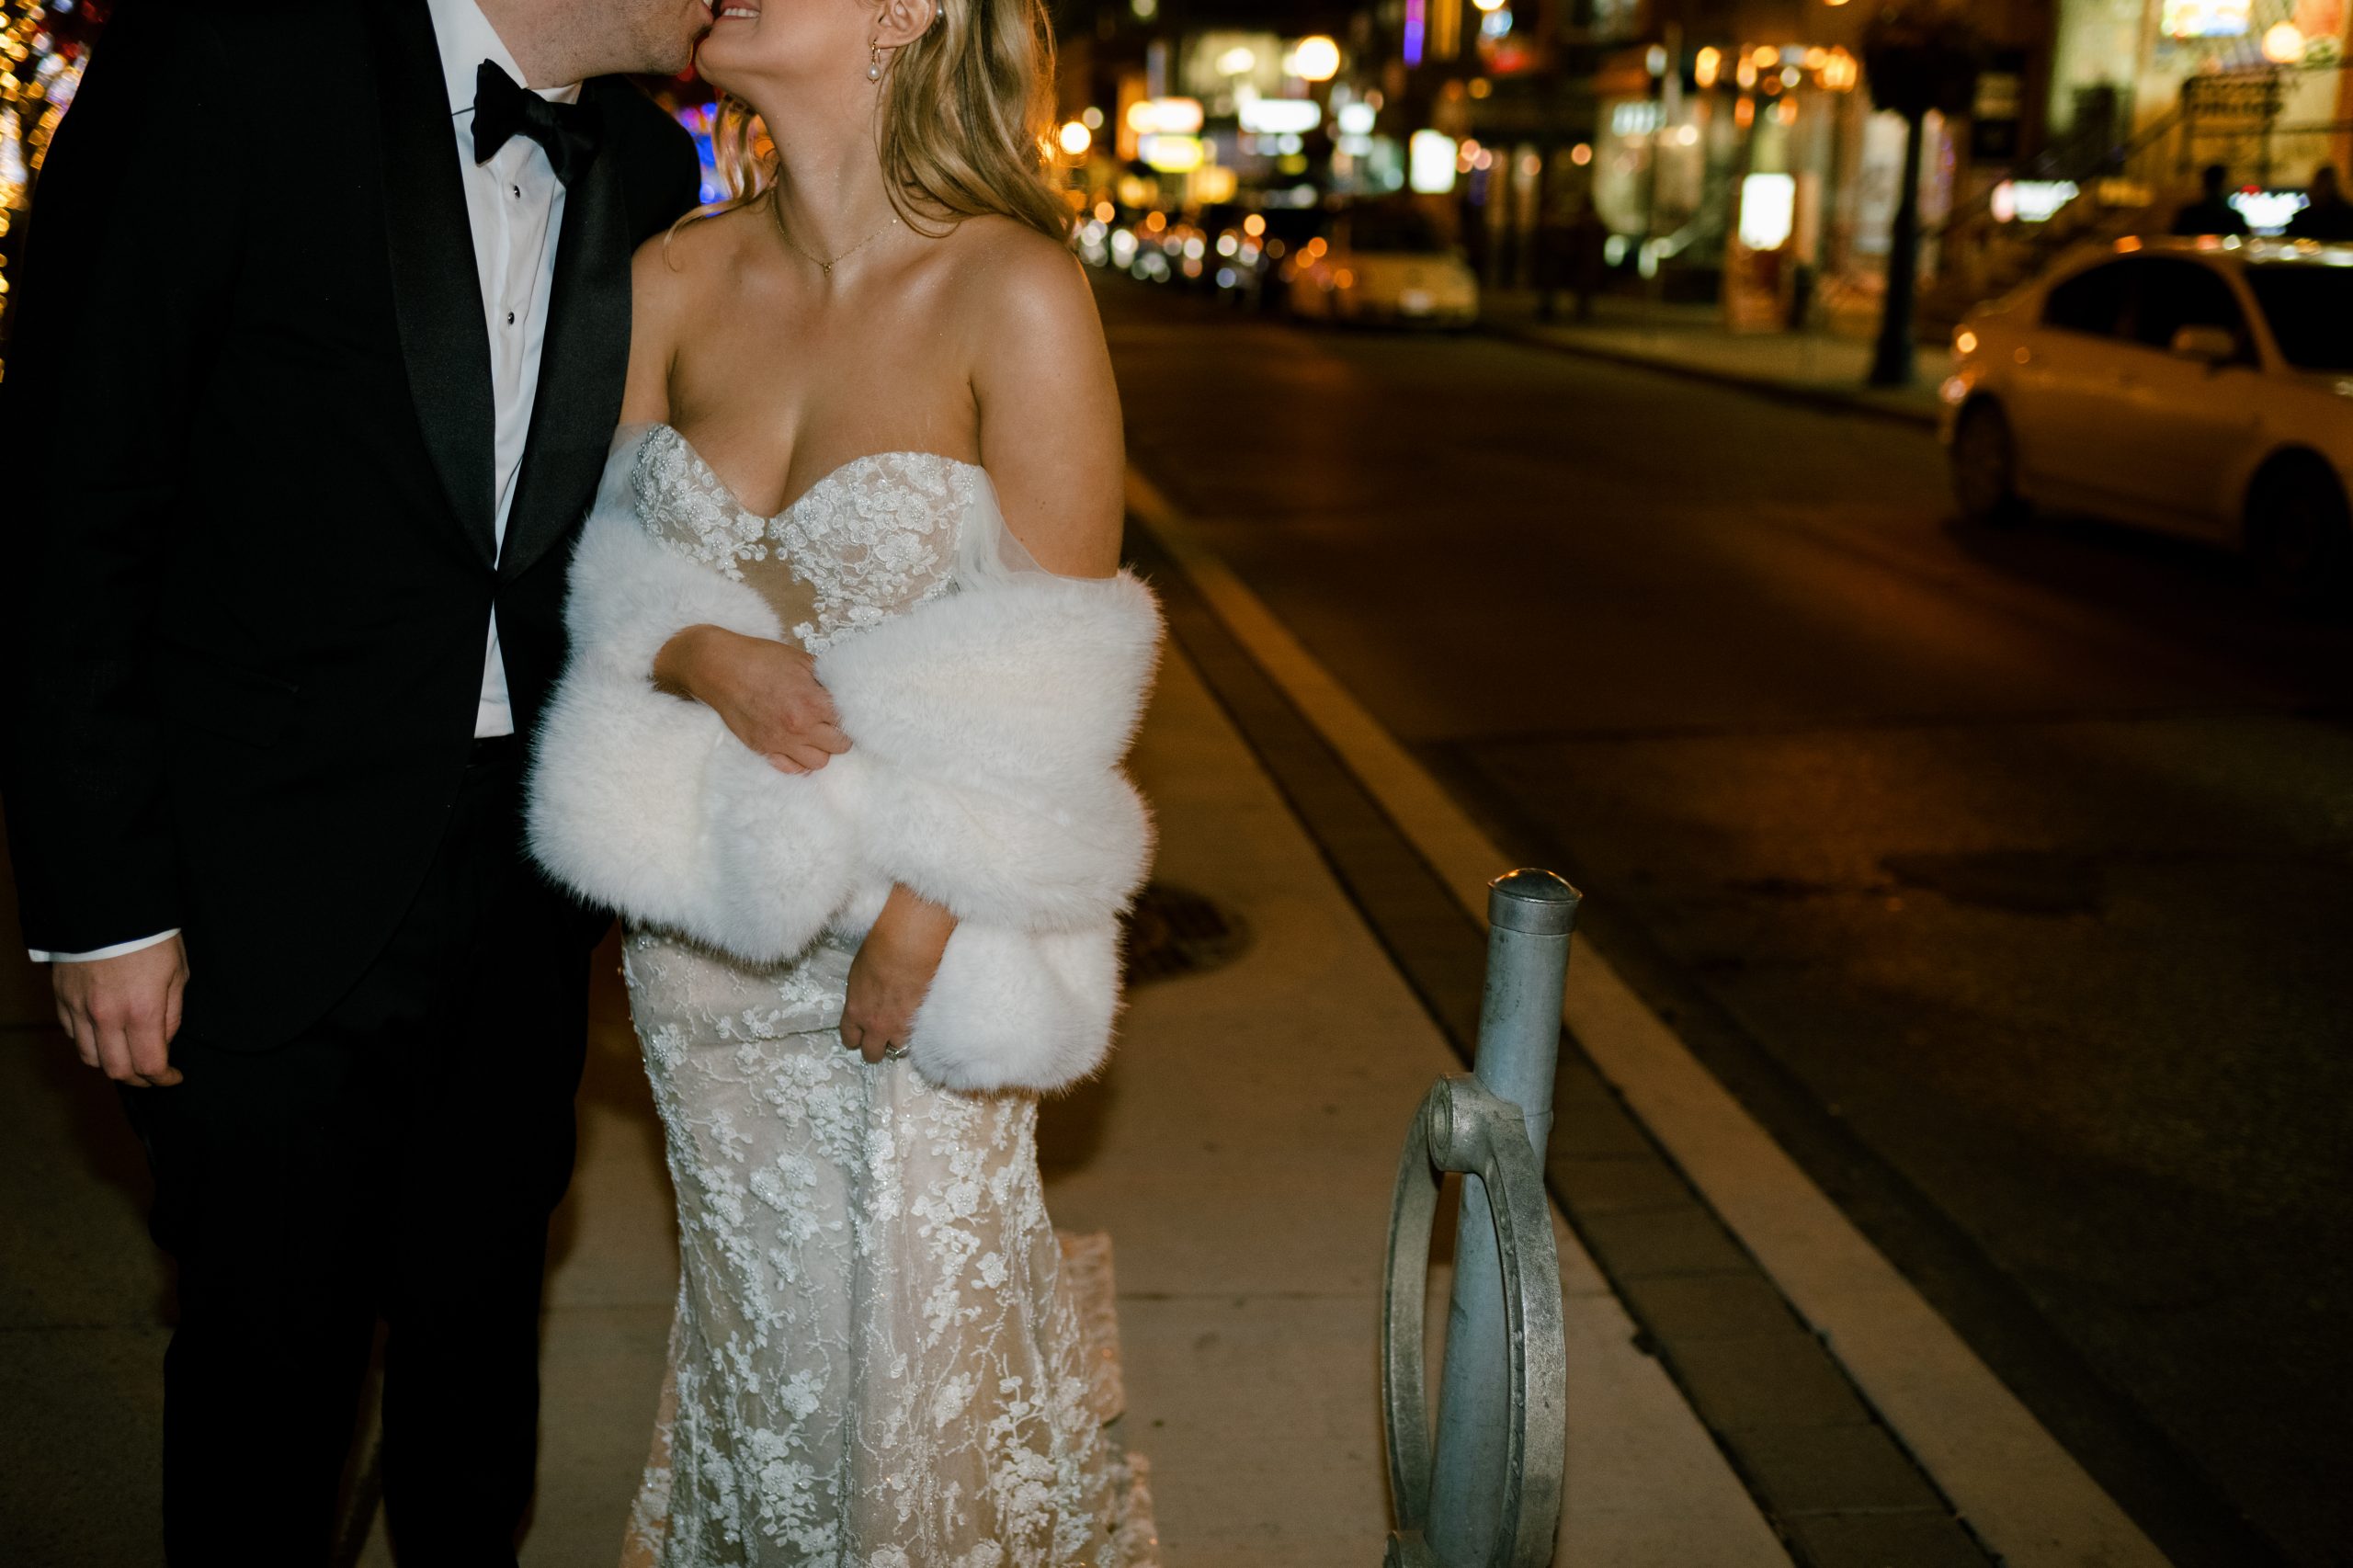 couple walks around Yorkville at night on wedding night